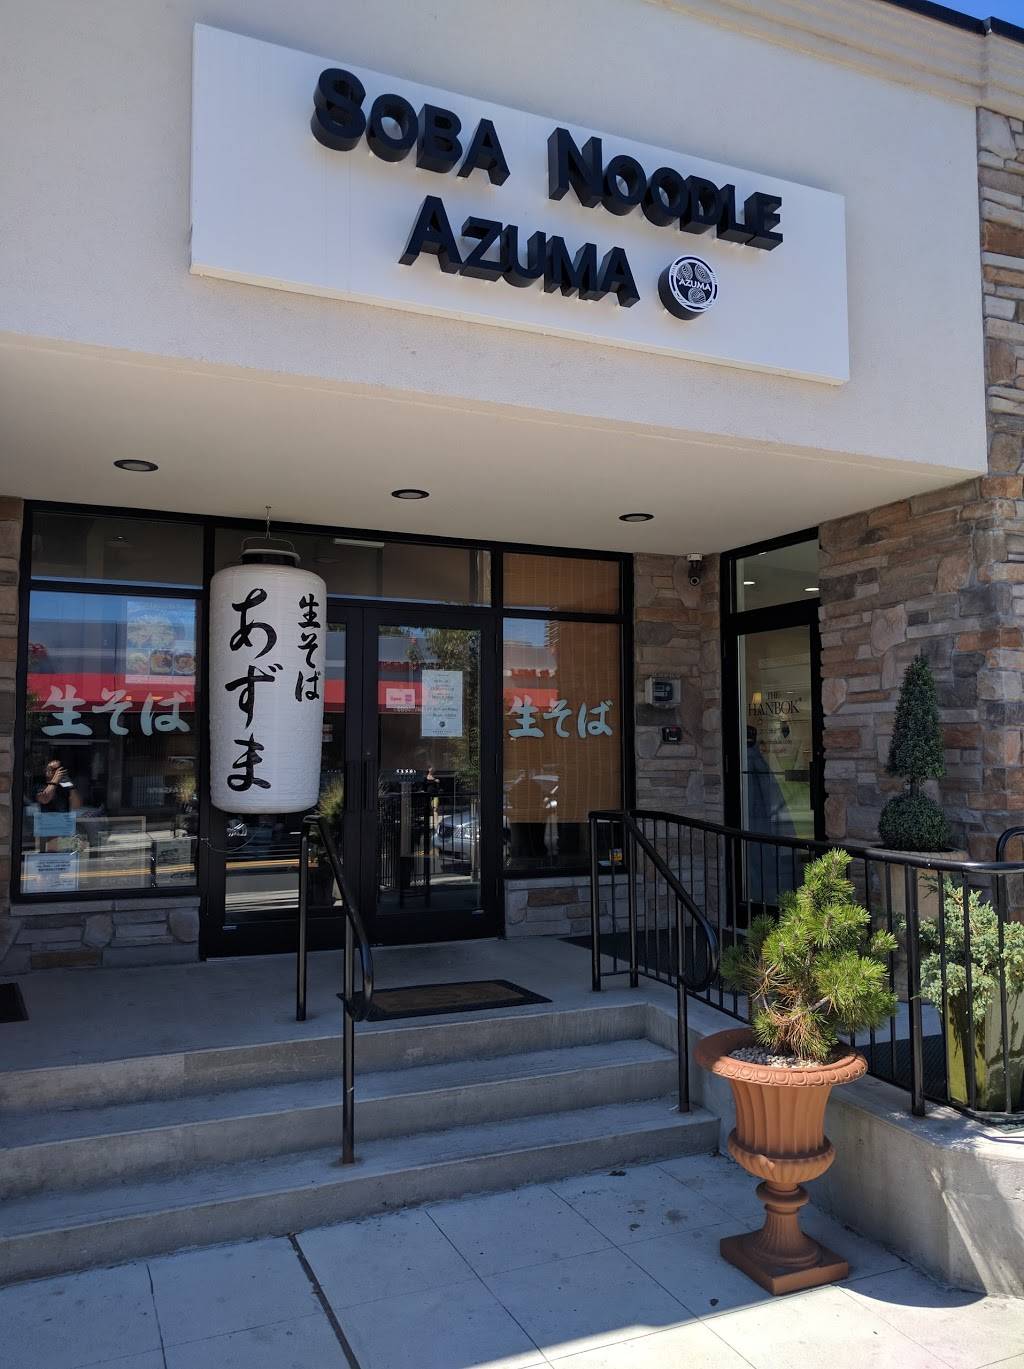 Soba Noodle Azuma | restaurant | 246 Main St, Fort Lee, NJ 07024, USA | 2015851319 OR +1 201-585-1319